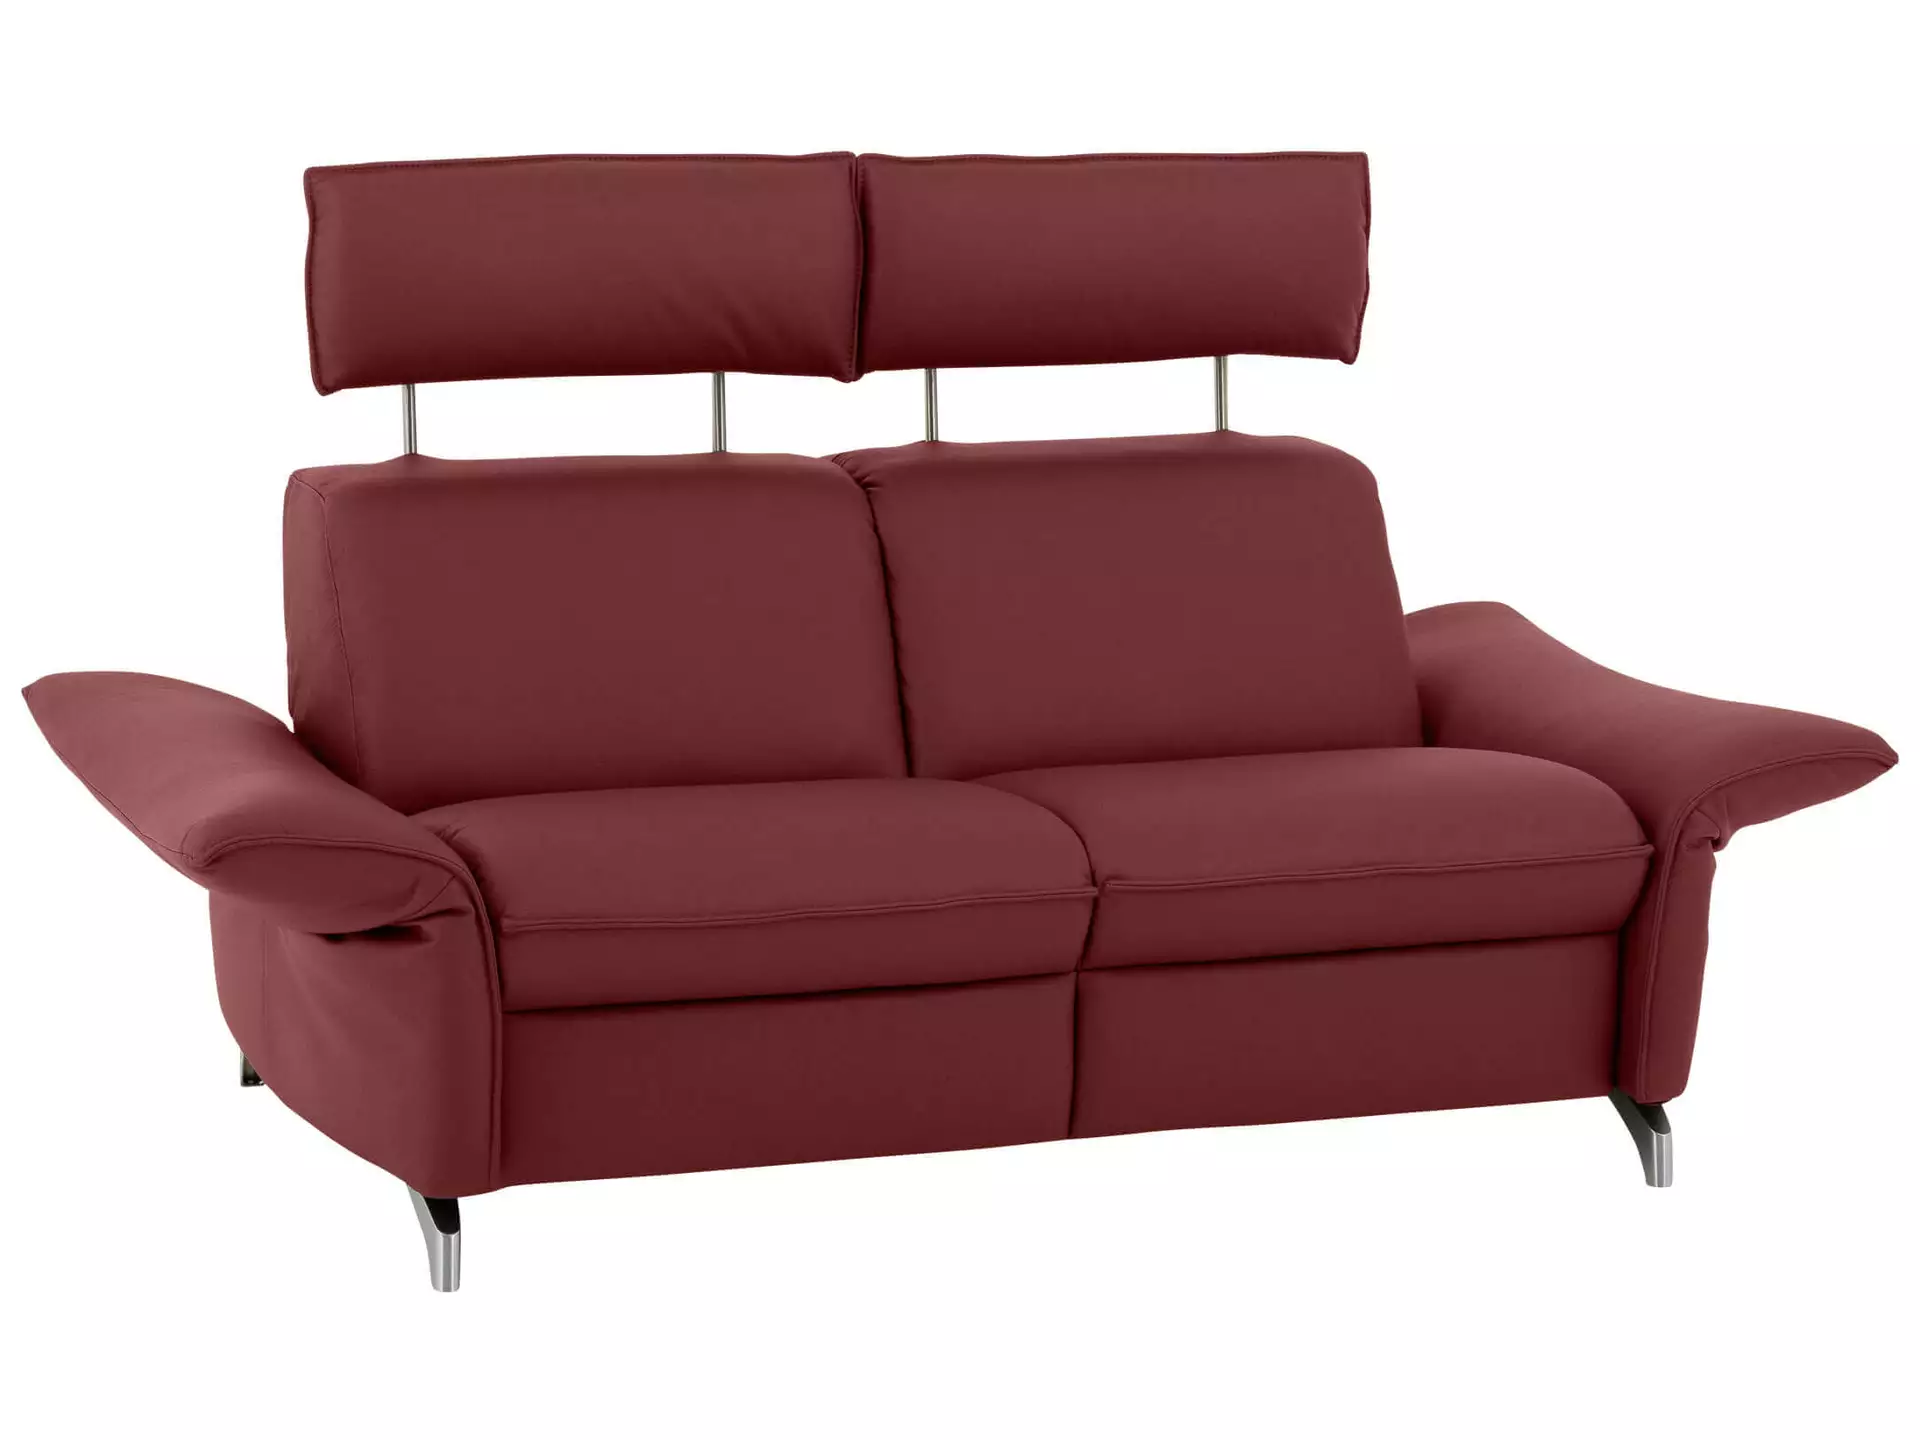 Sofa Catania Basic B: 164 cm Himolla / Farbe: Merlot / Material: Leder Basic